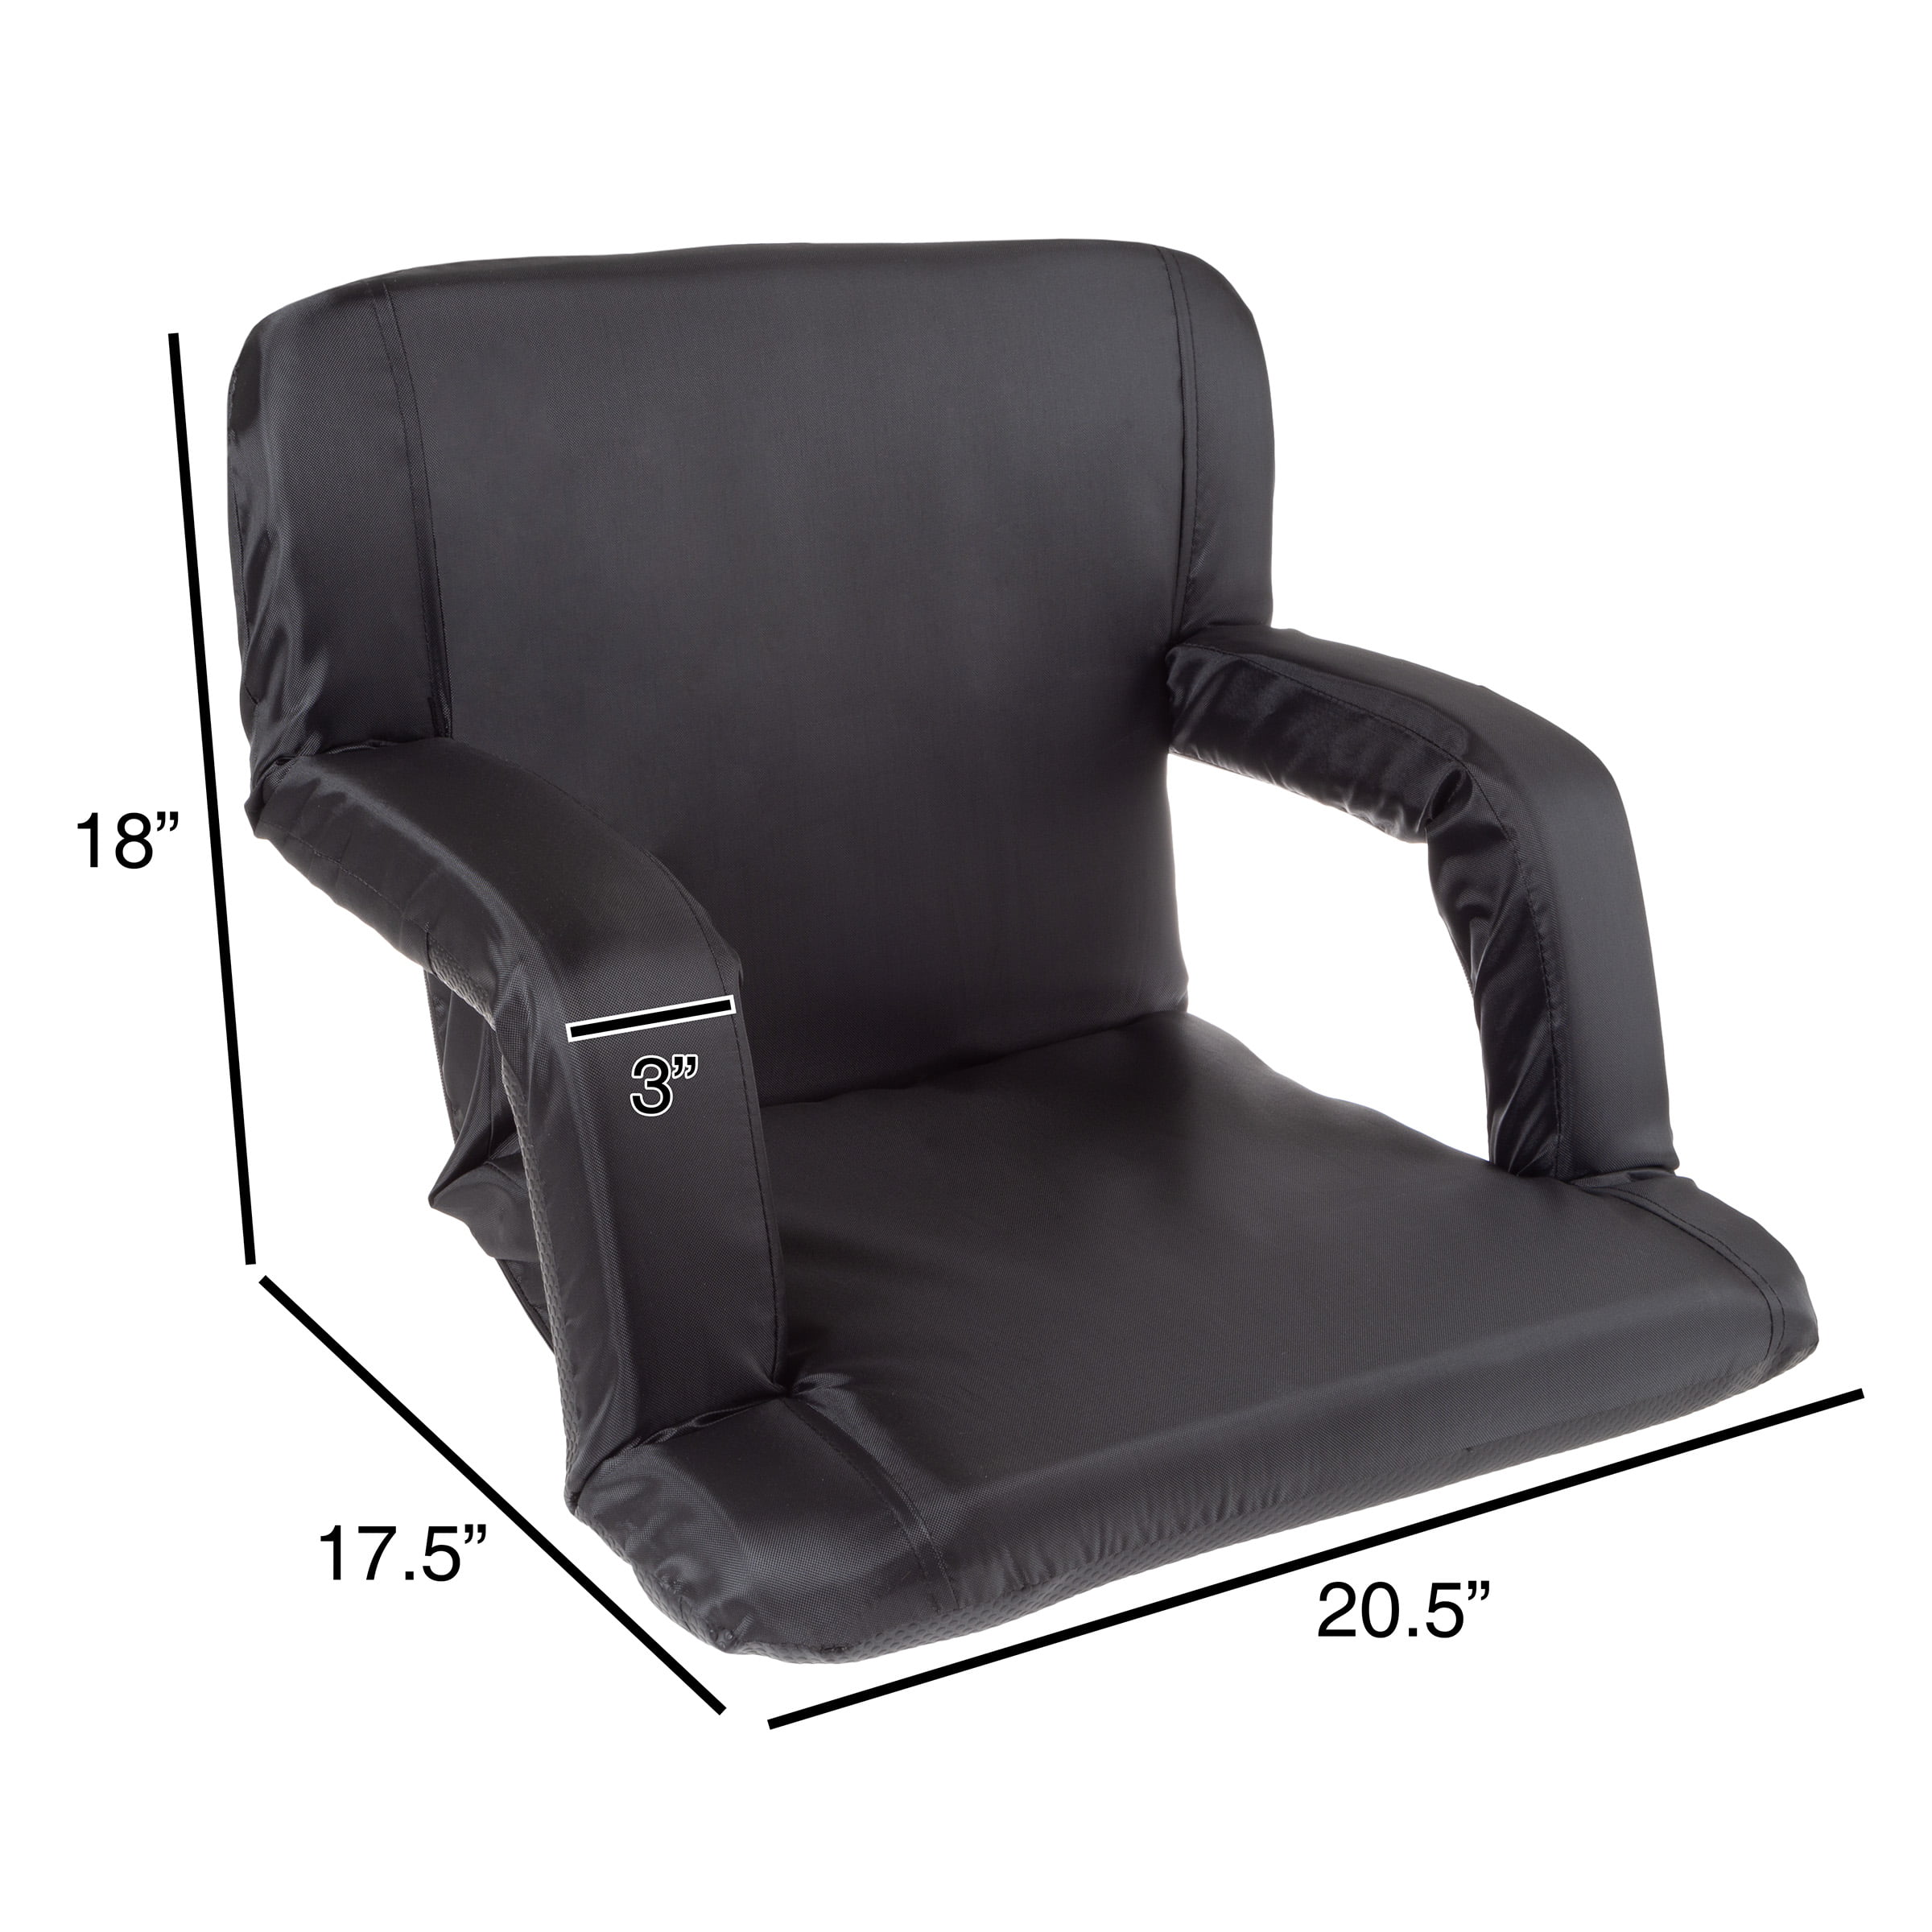 Coleman Portable Stadium Seat Cushion with Backrest, Black